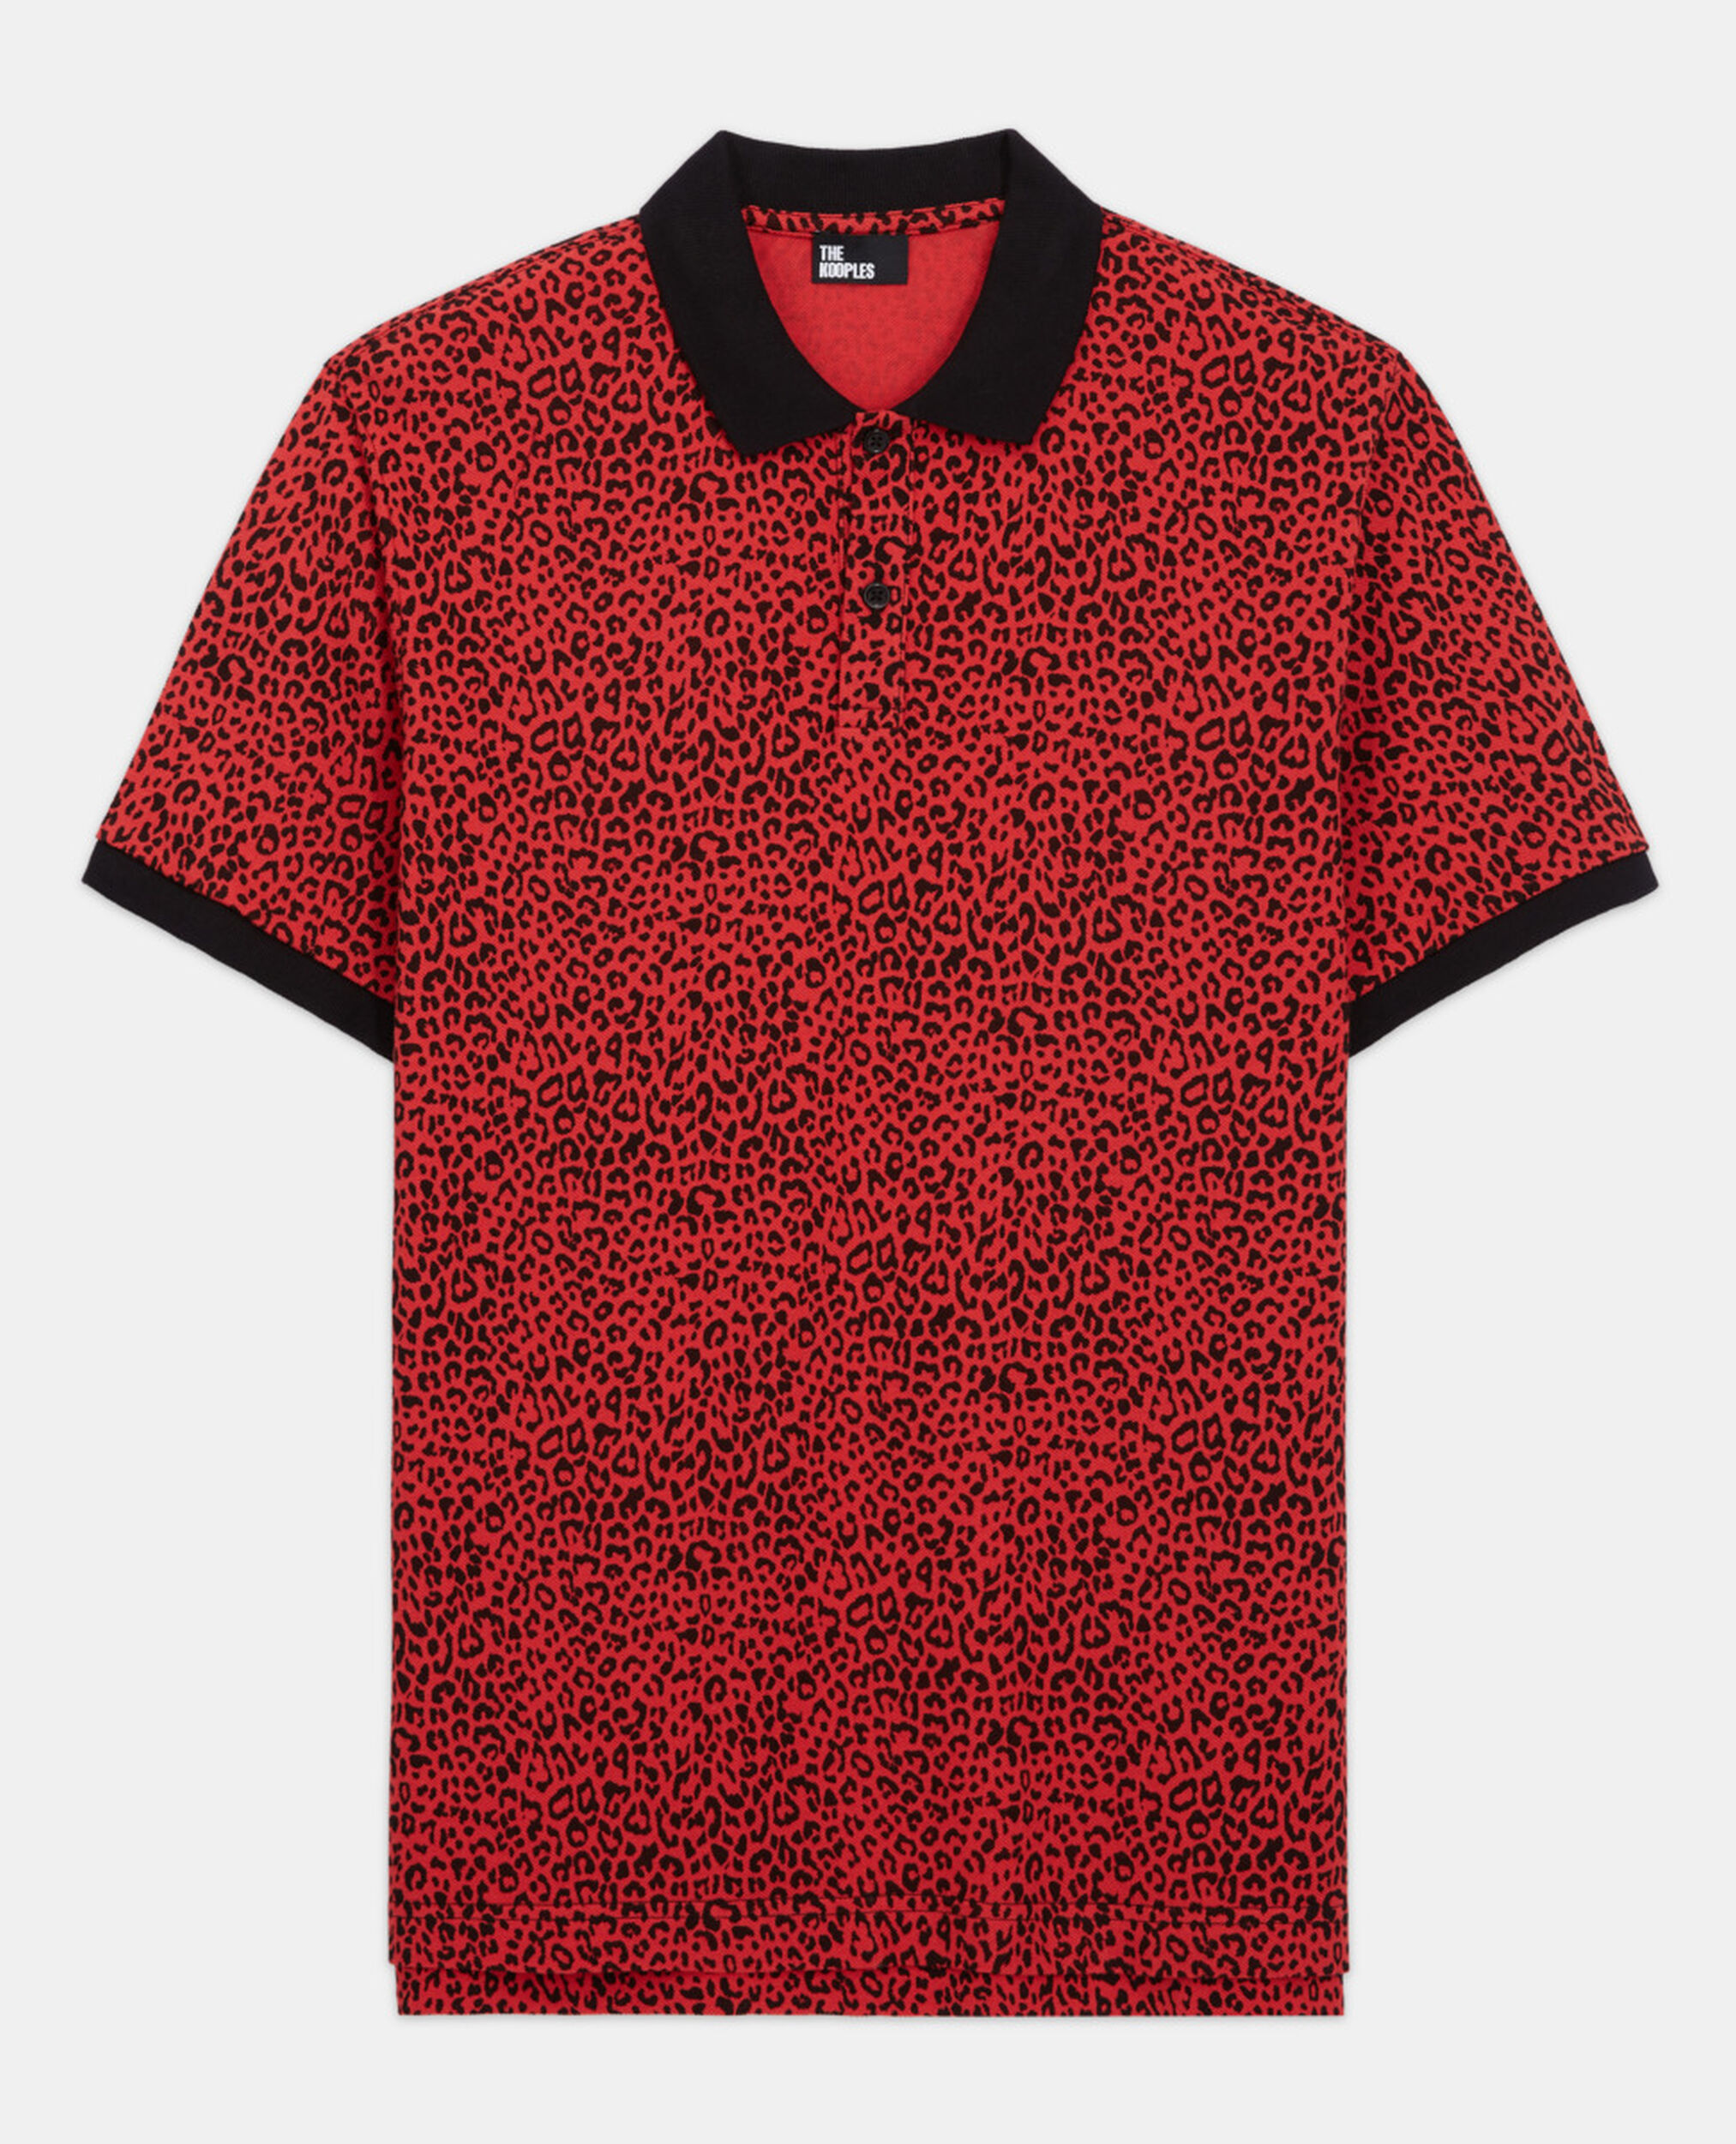 Camisa polo leopardo roja, DARK RED, hi-res image number null